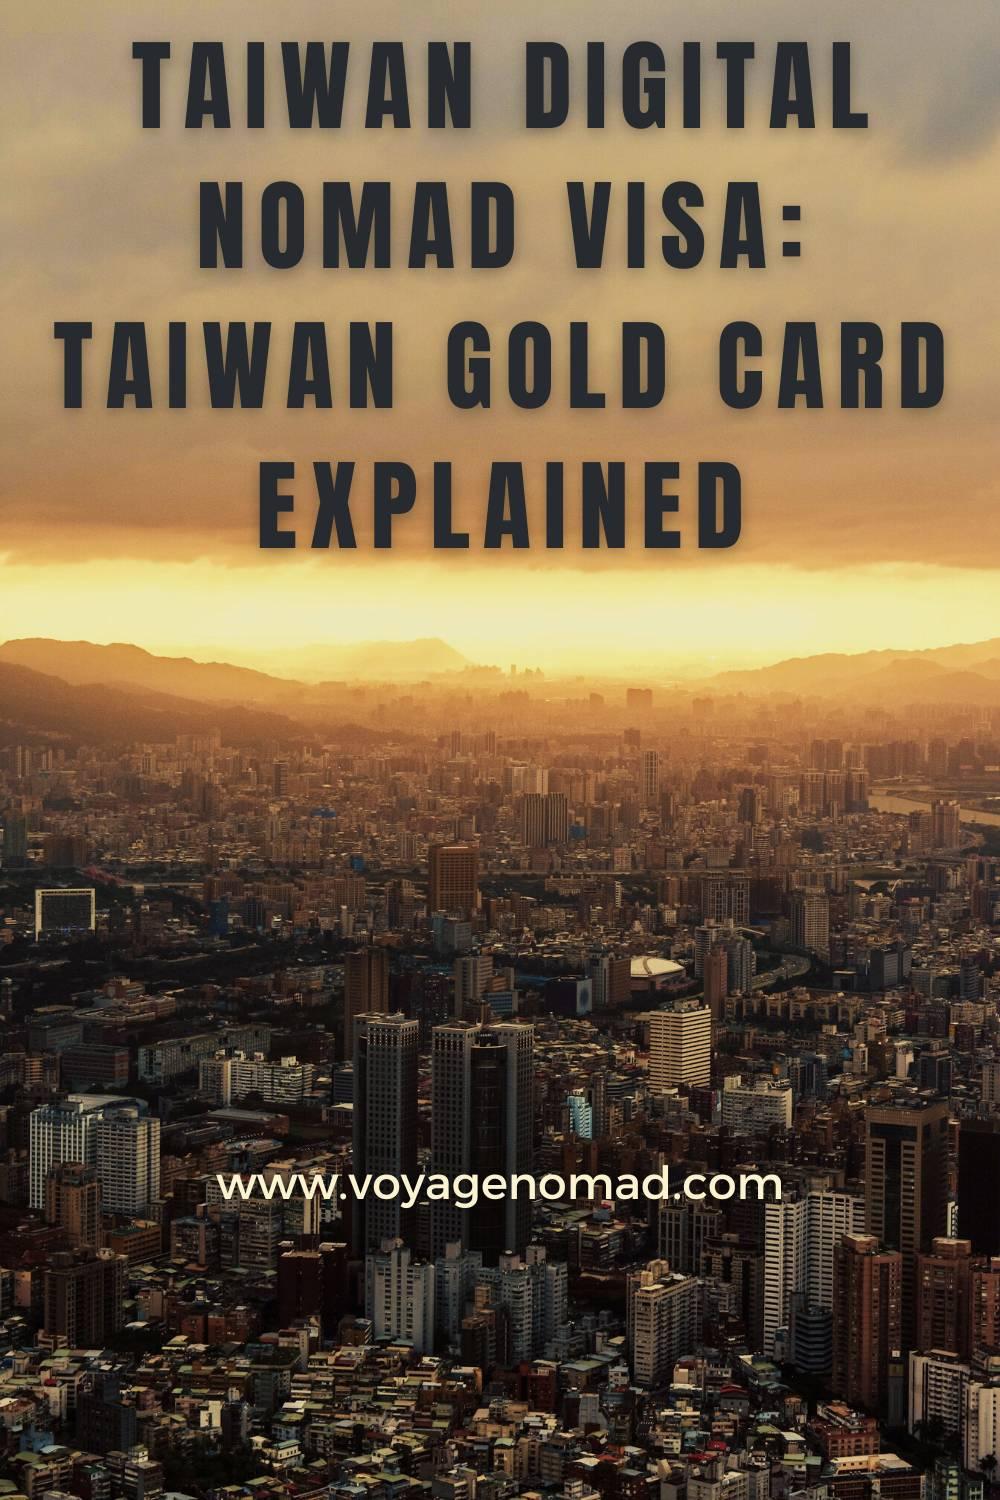 Taiwan Digital Nomad Visa: Taiwan Gold Card Explained